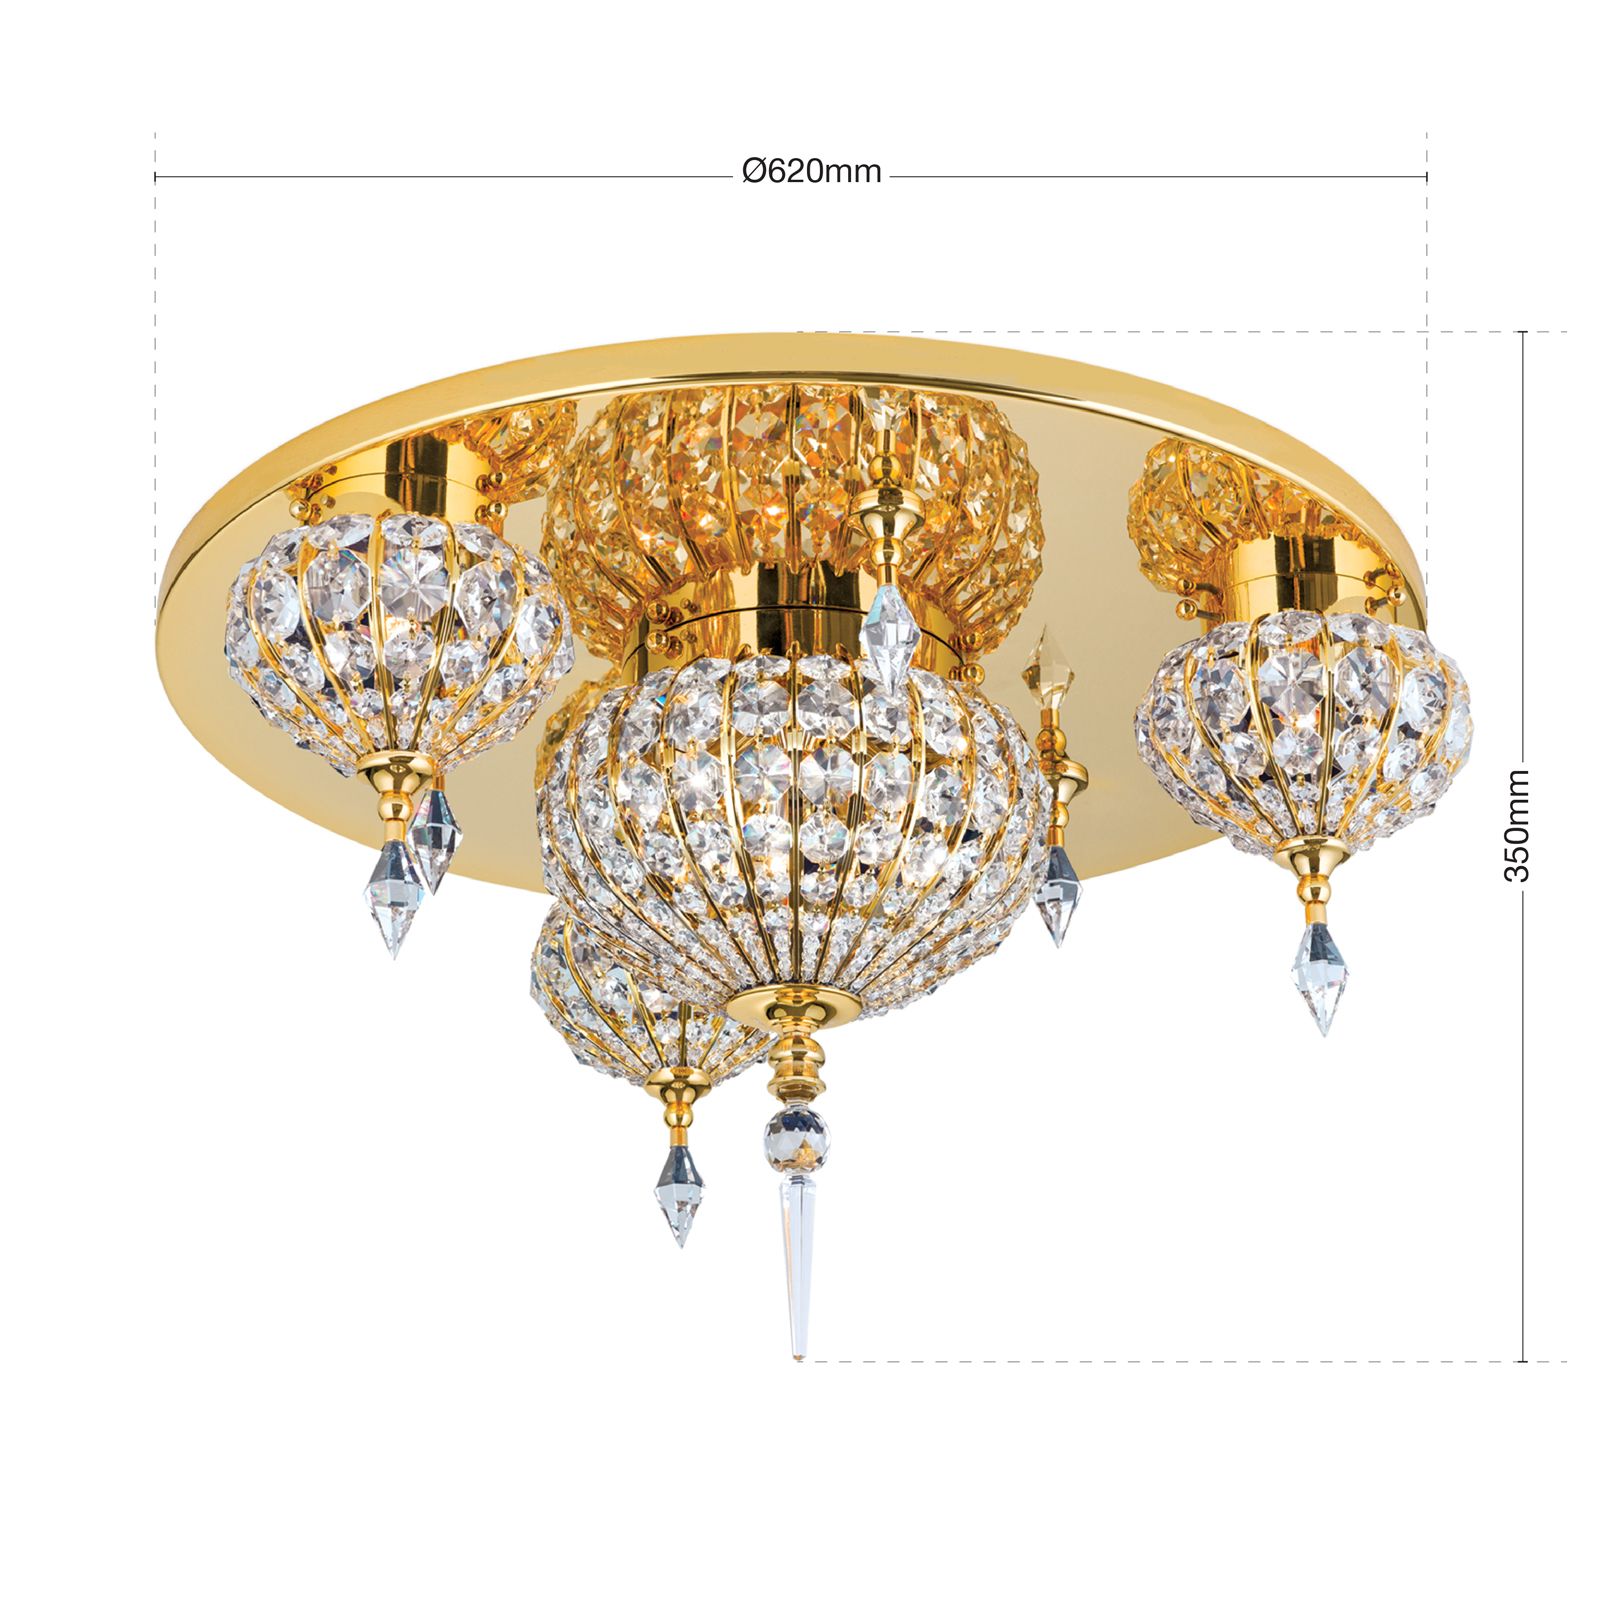 Oriental ceiling light, 62cm, 24K gold plated